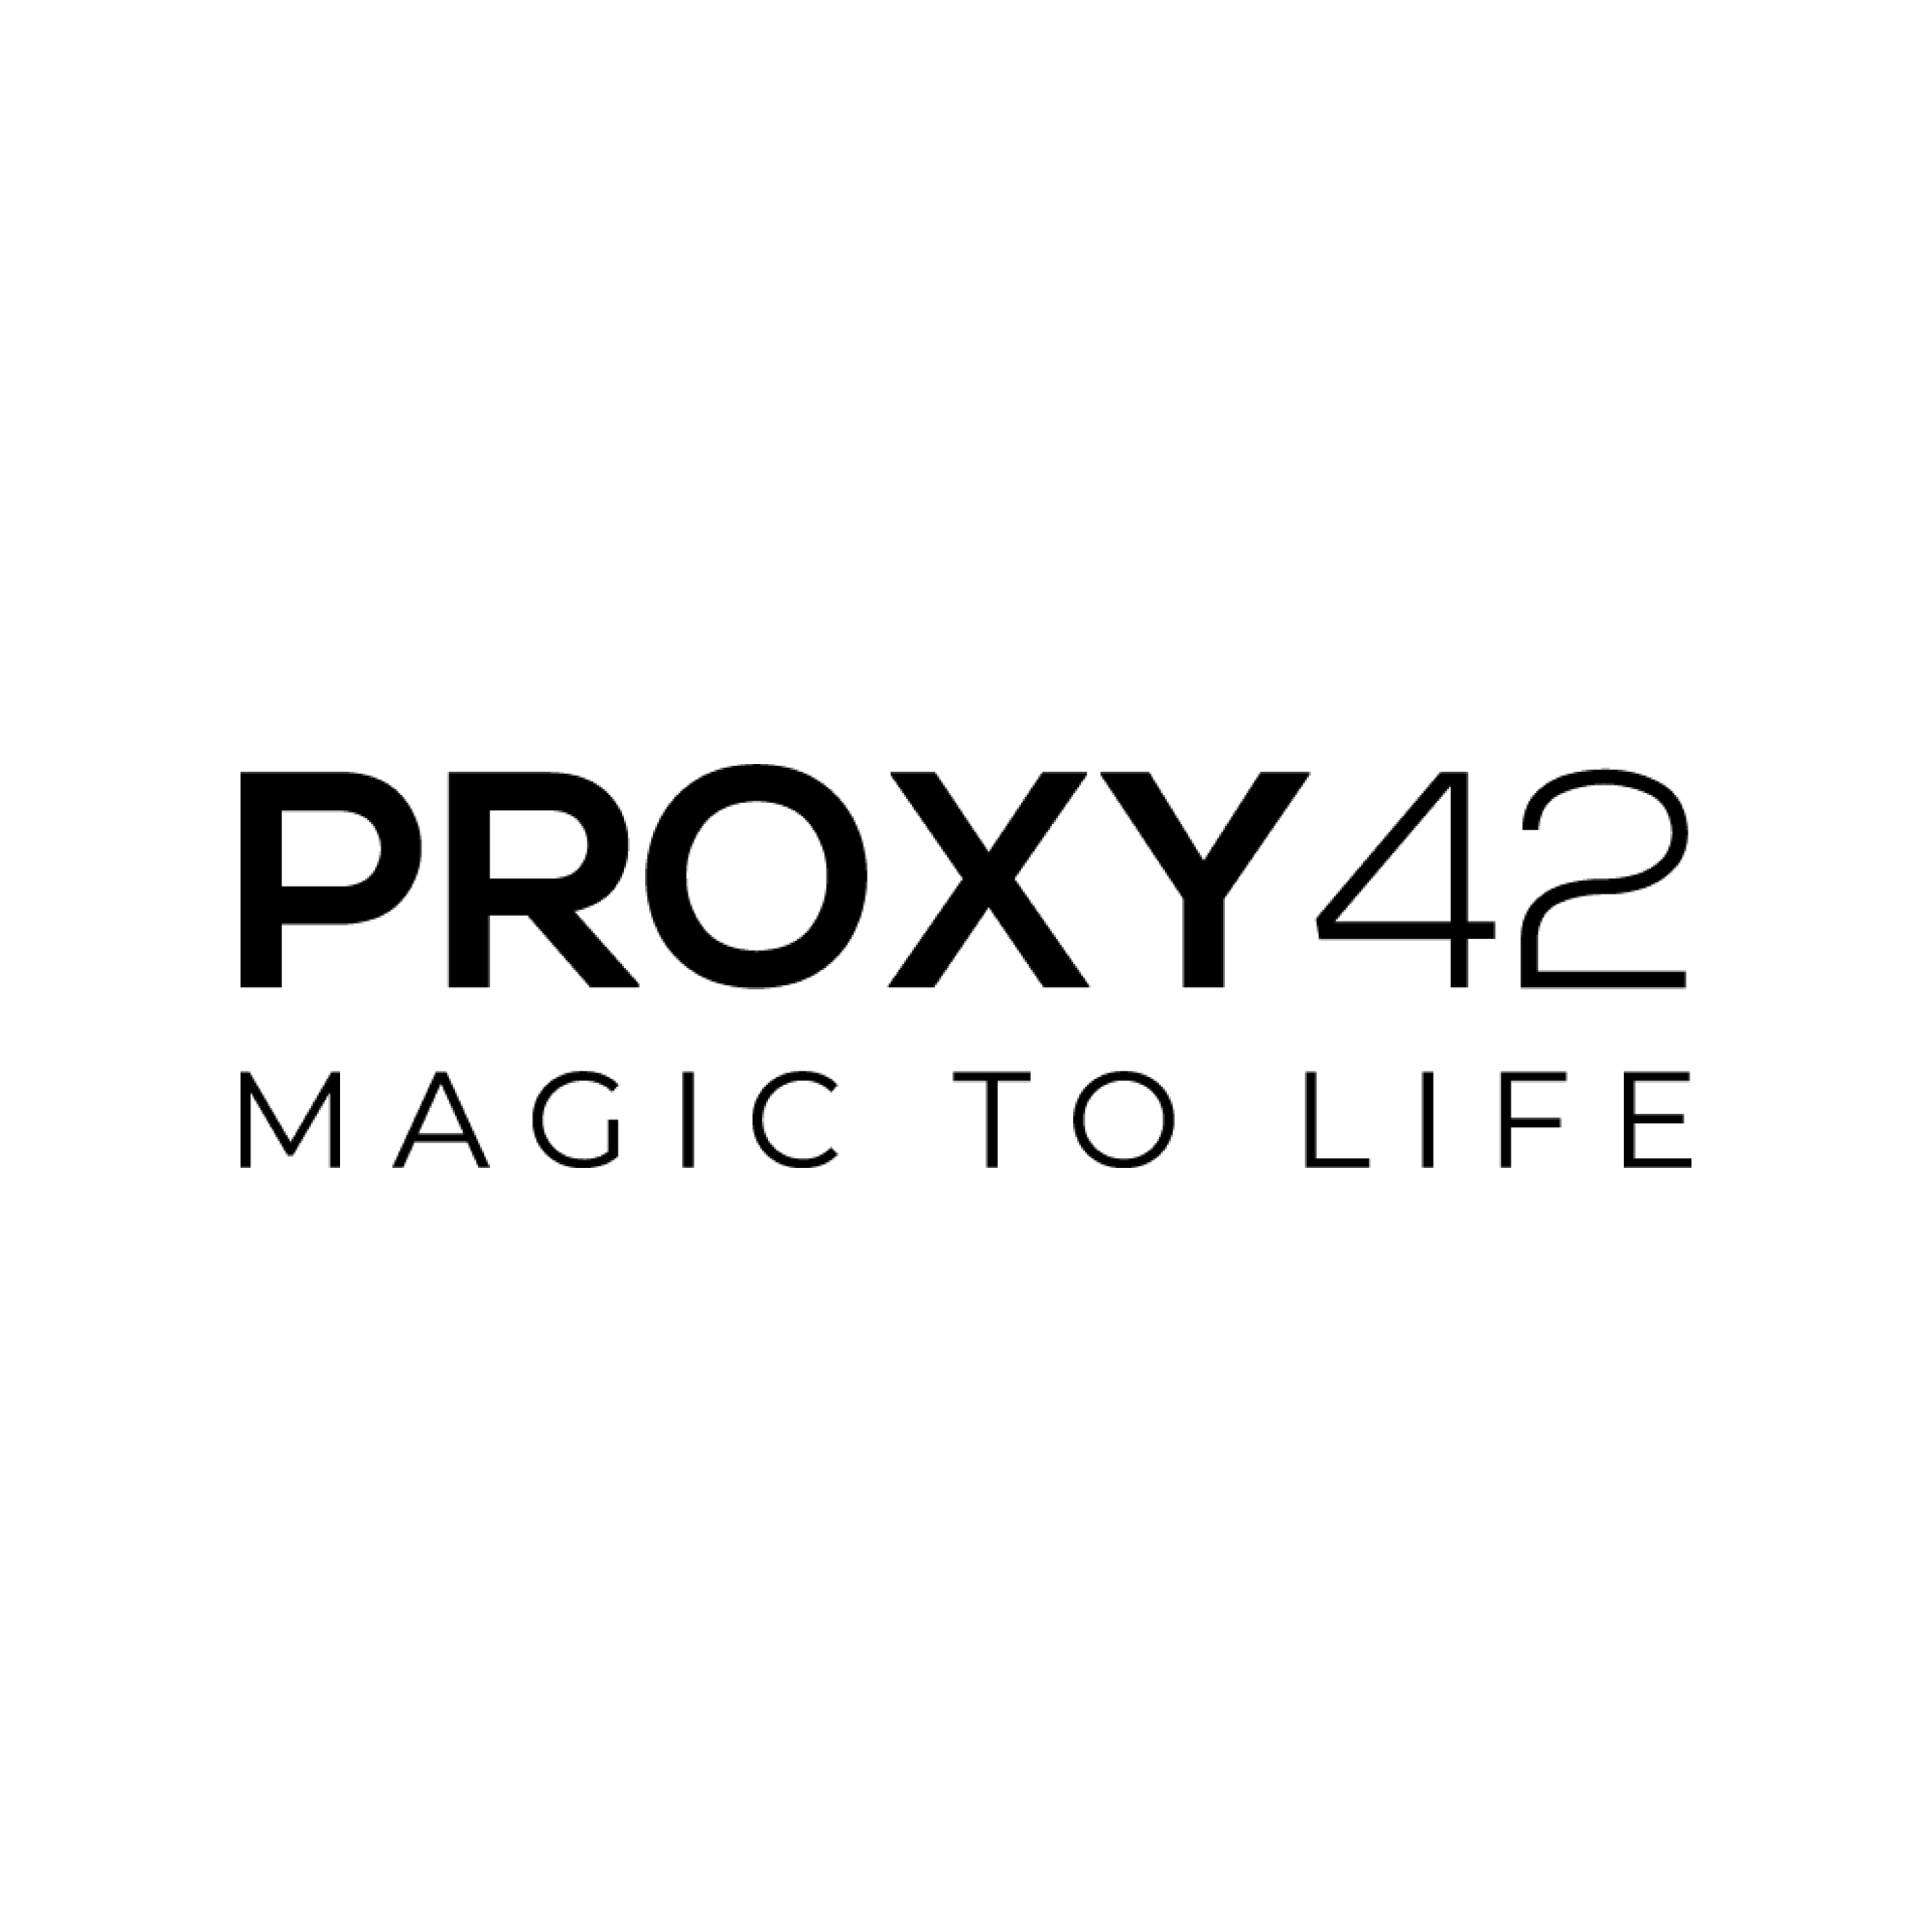 Proxy42